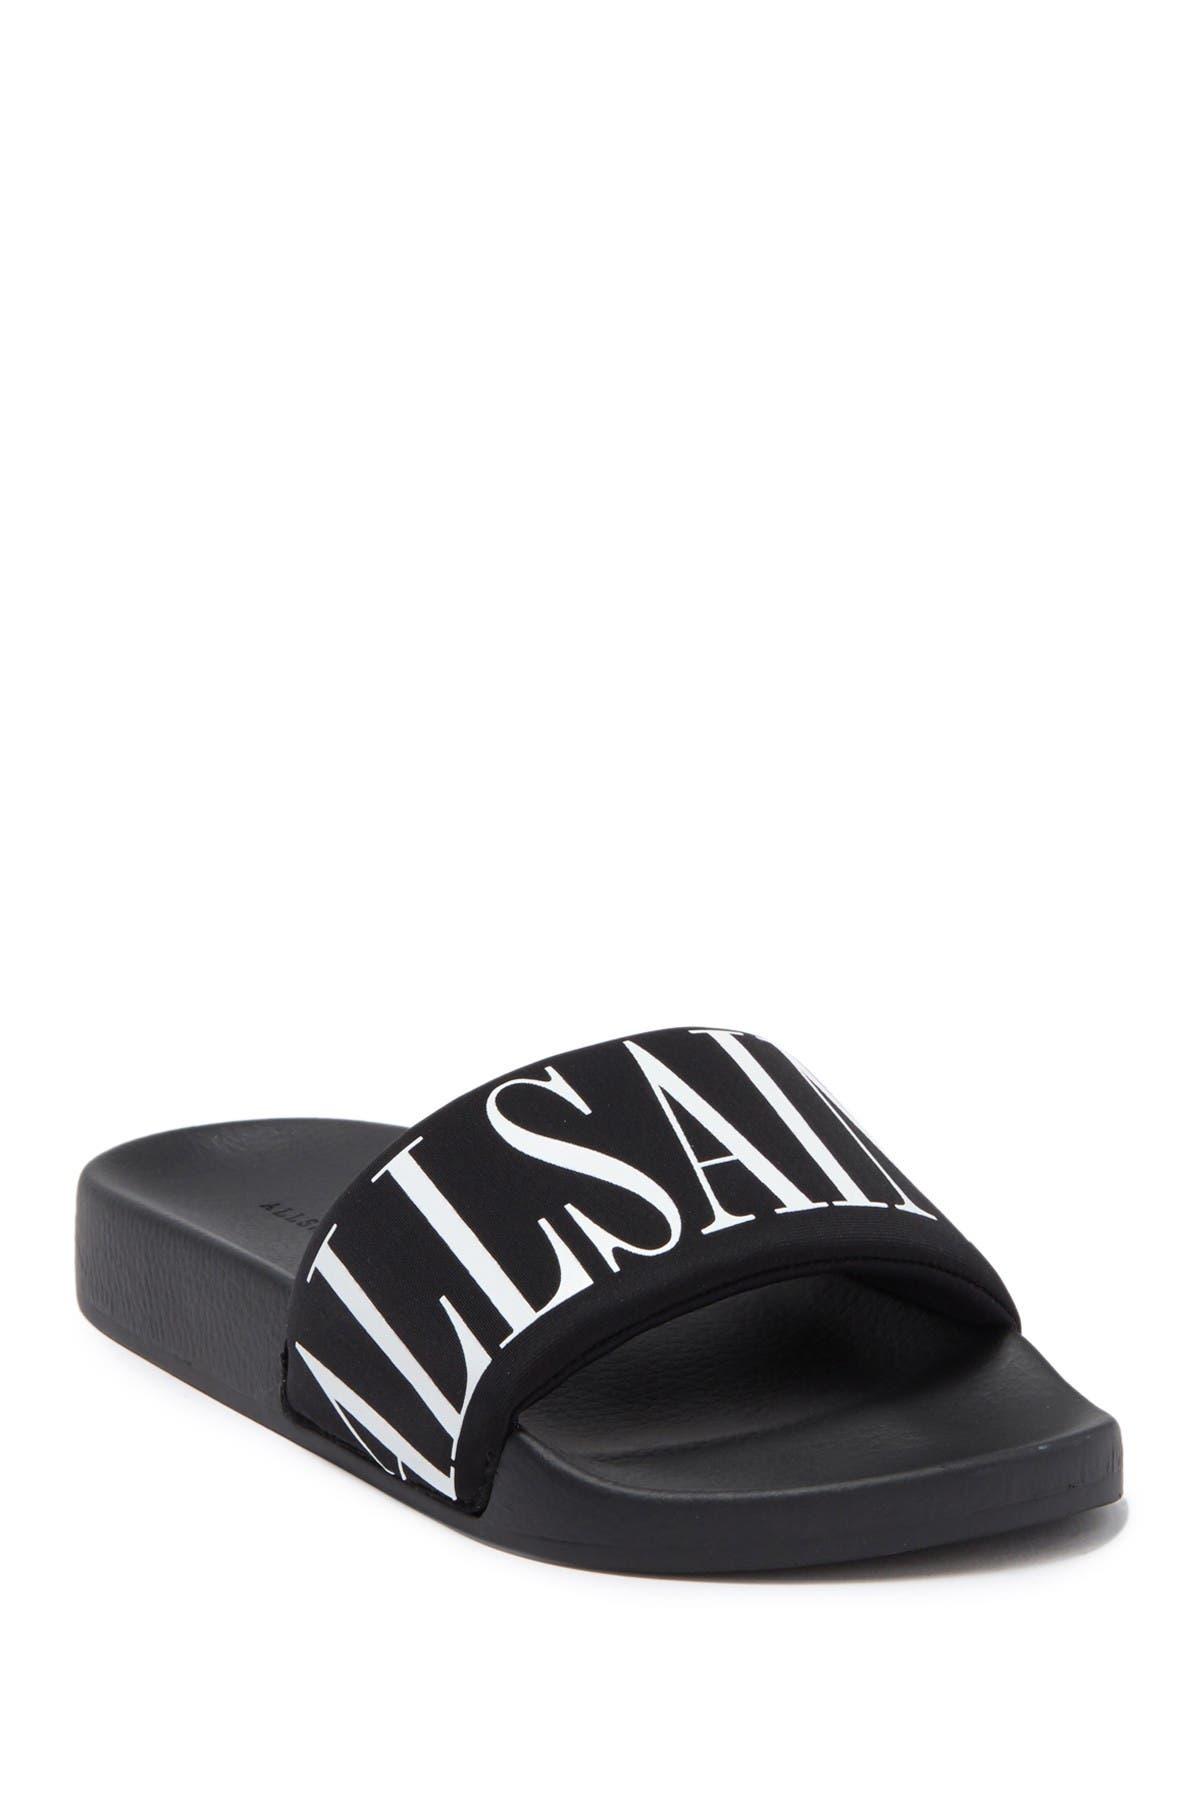 AllSaints Signet Pool Slide Sandal in Black | Lyst